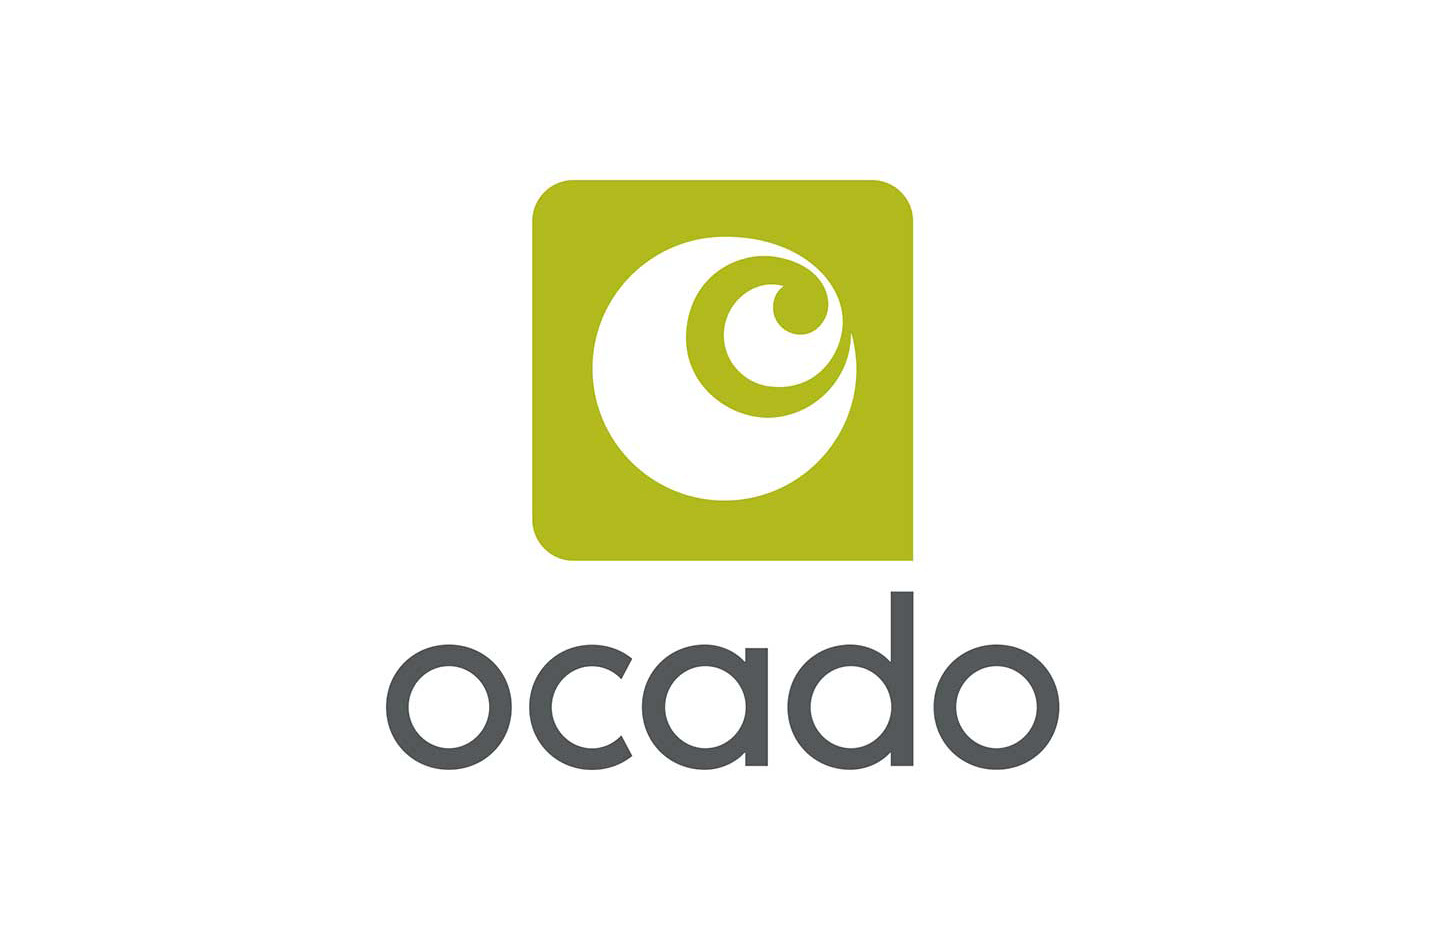 Ocados 2020 discount code